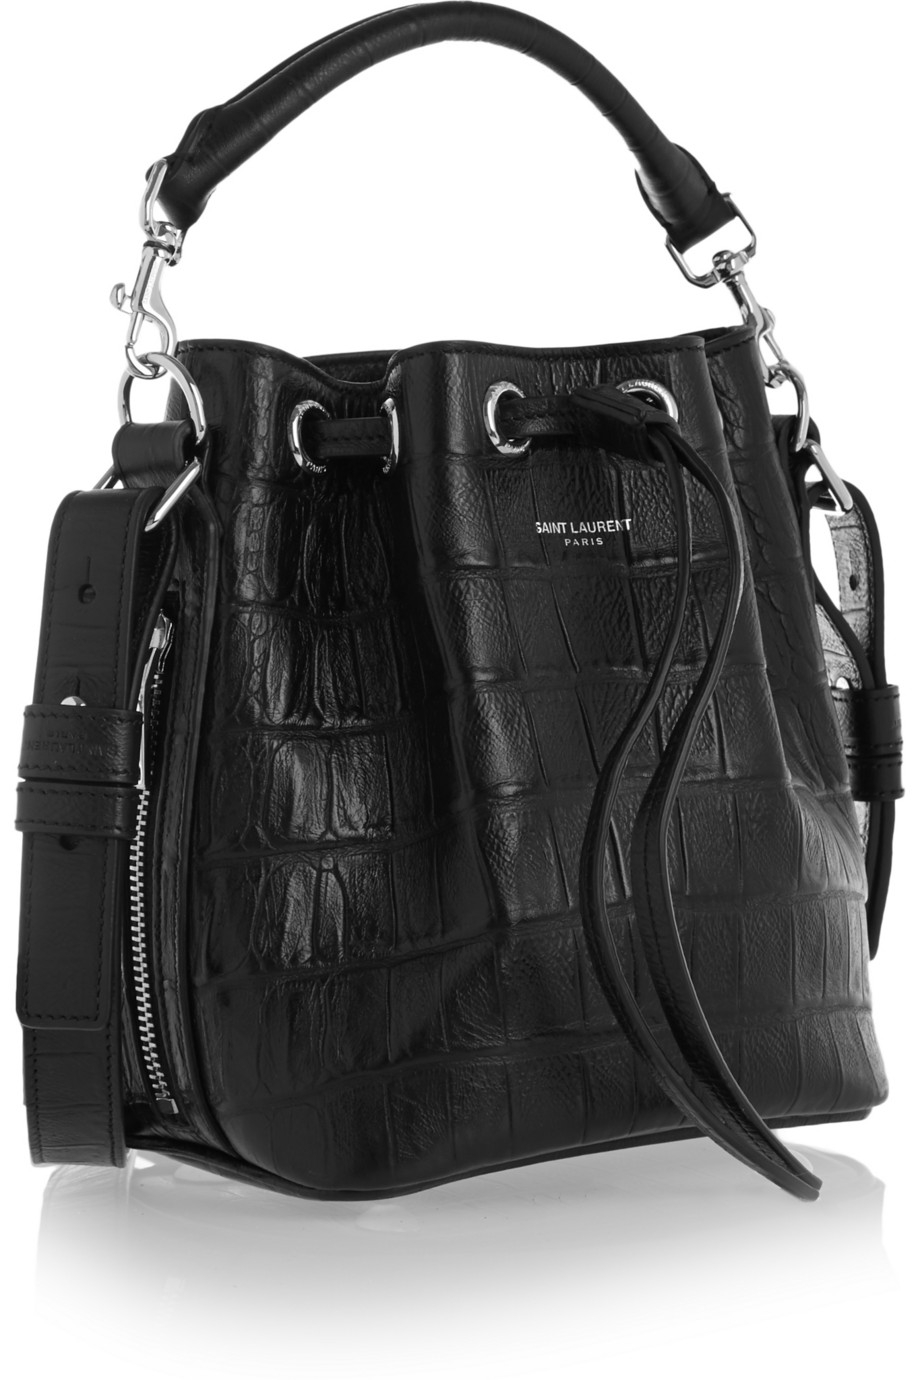 Lyst - Saint Laurent Emmanuelle Small Croc-Effect Leather Bucket Bag in Black